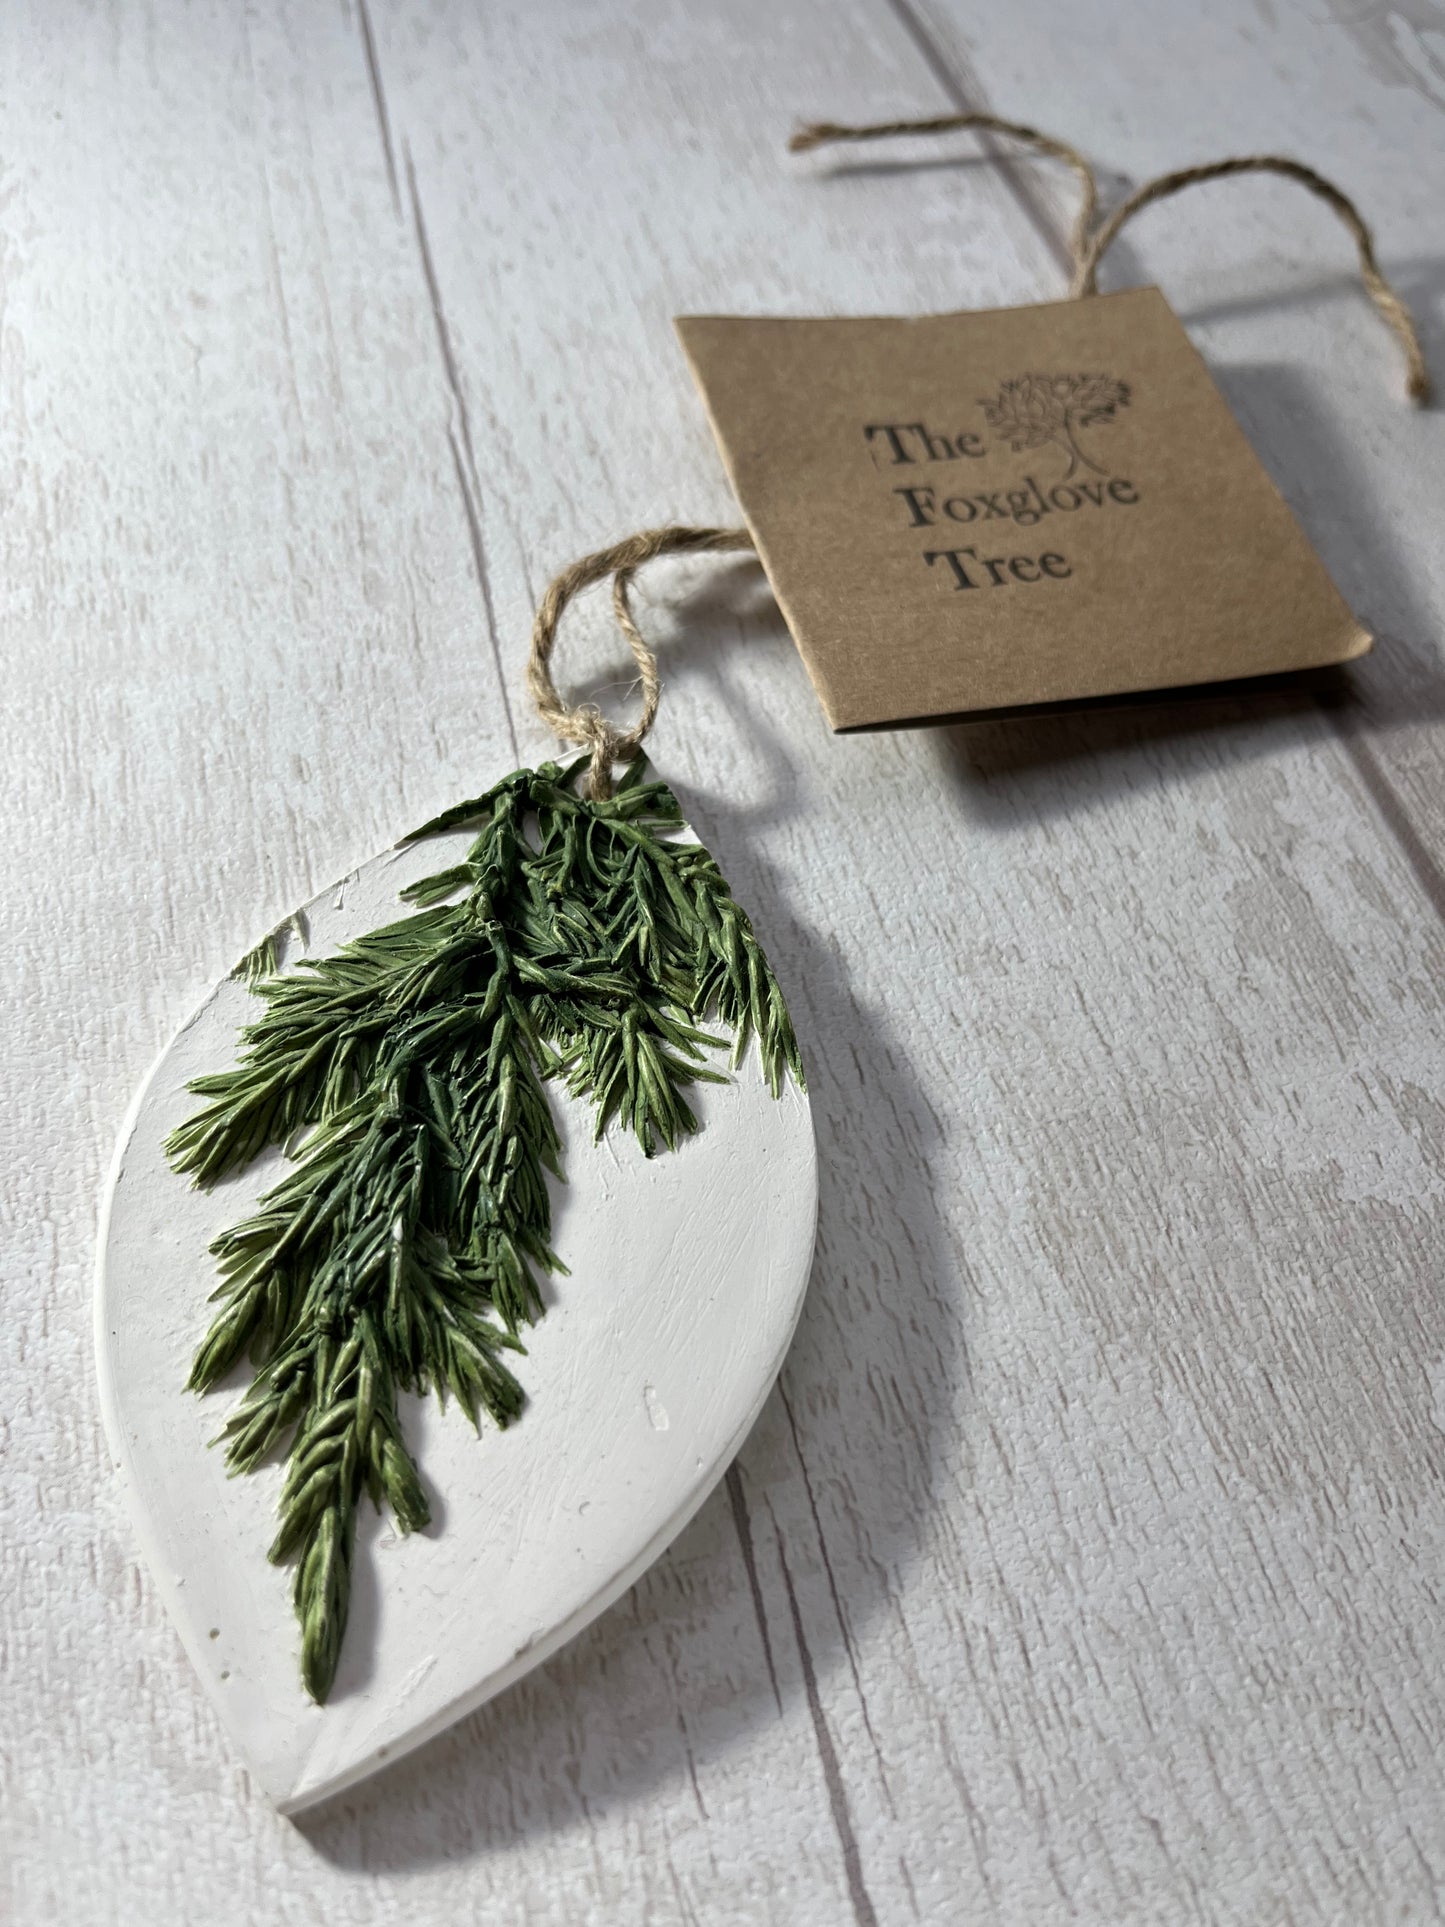 Pine Botanical Cast Fragrance Diffuser